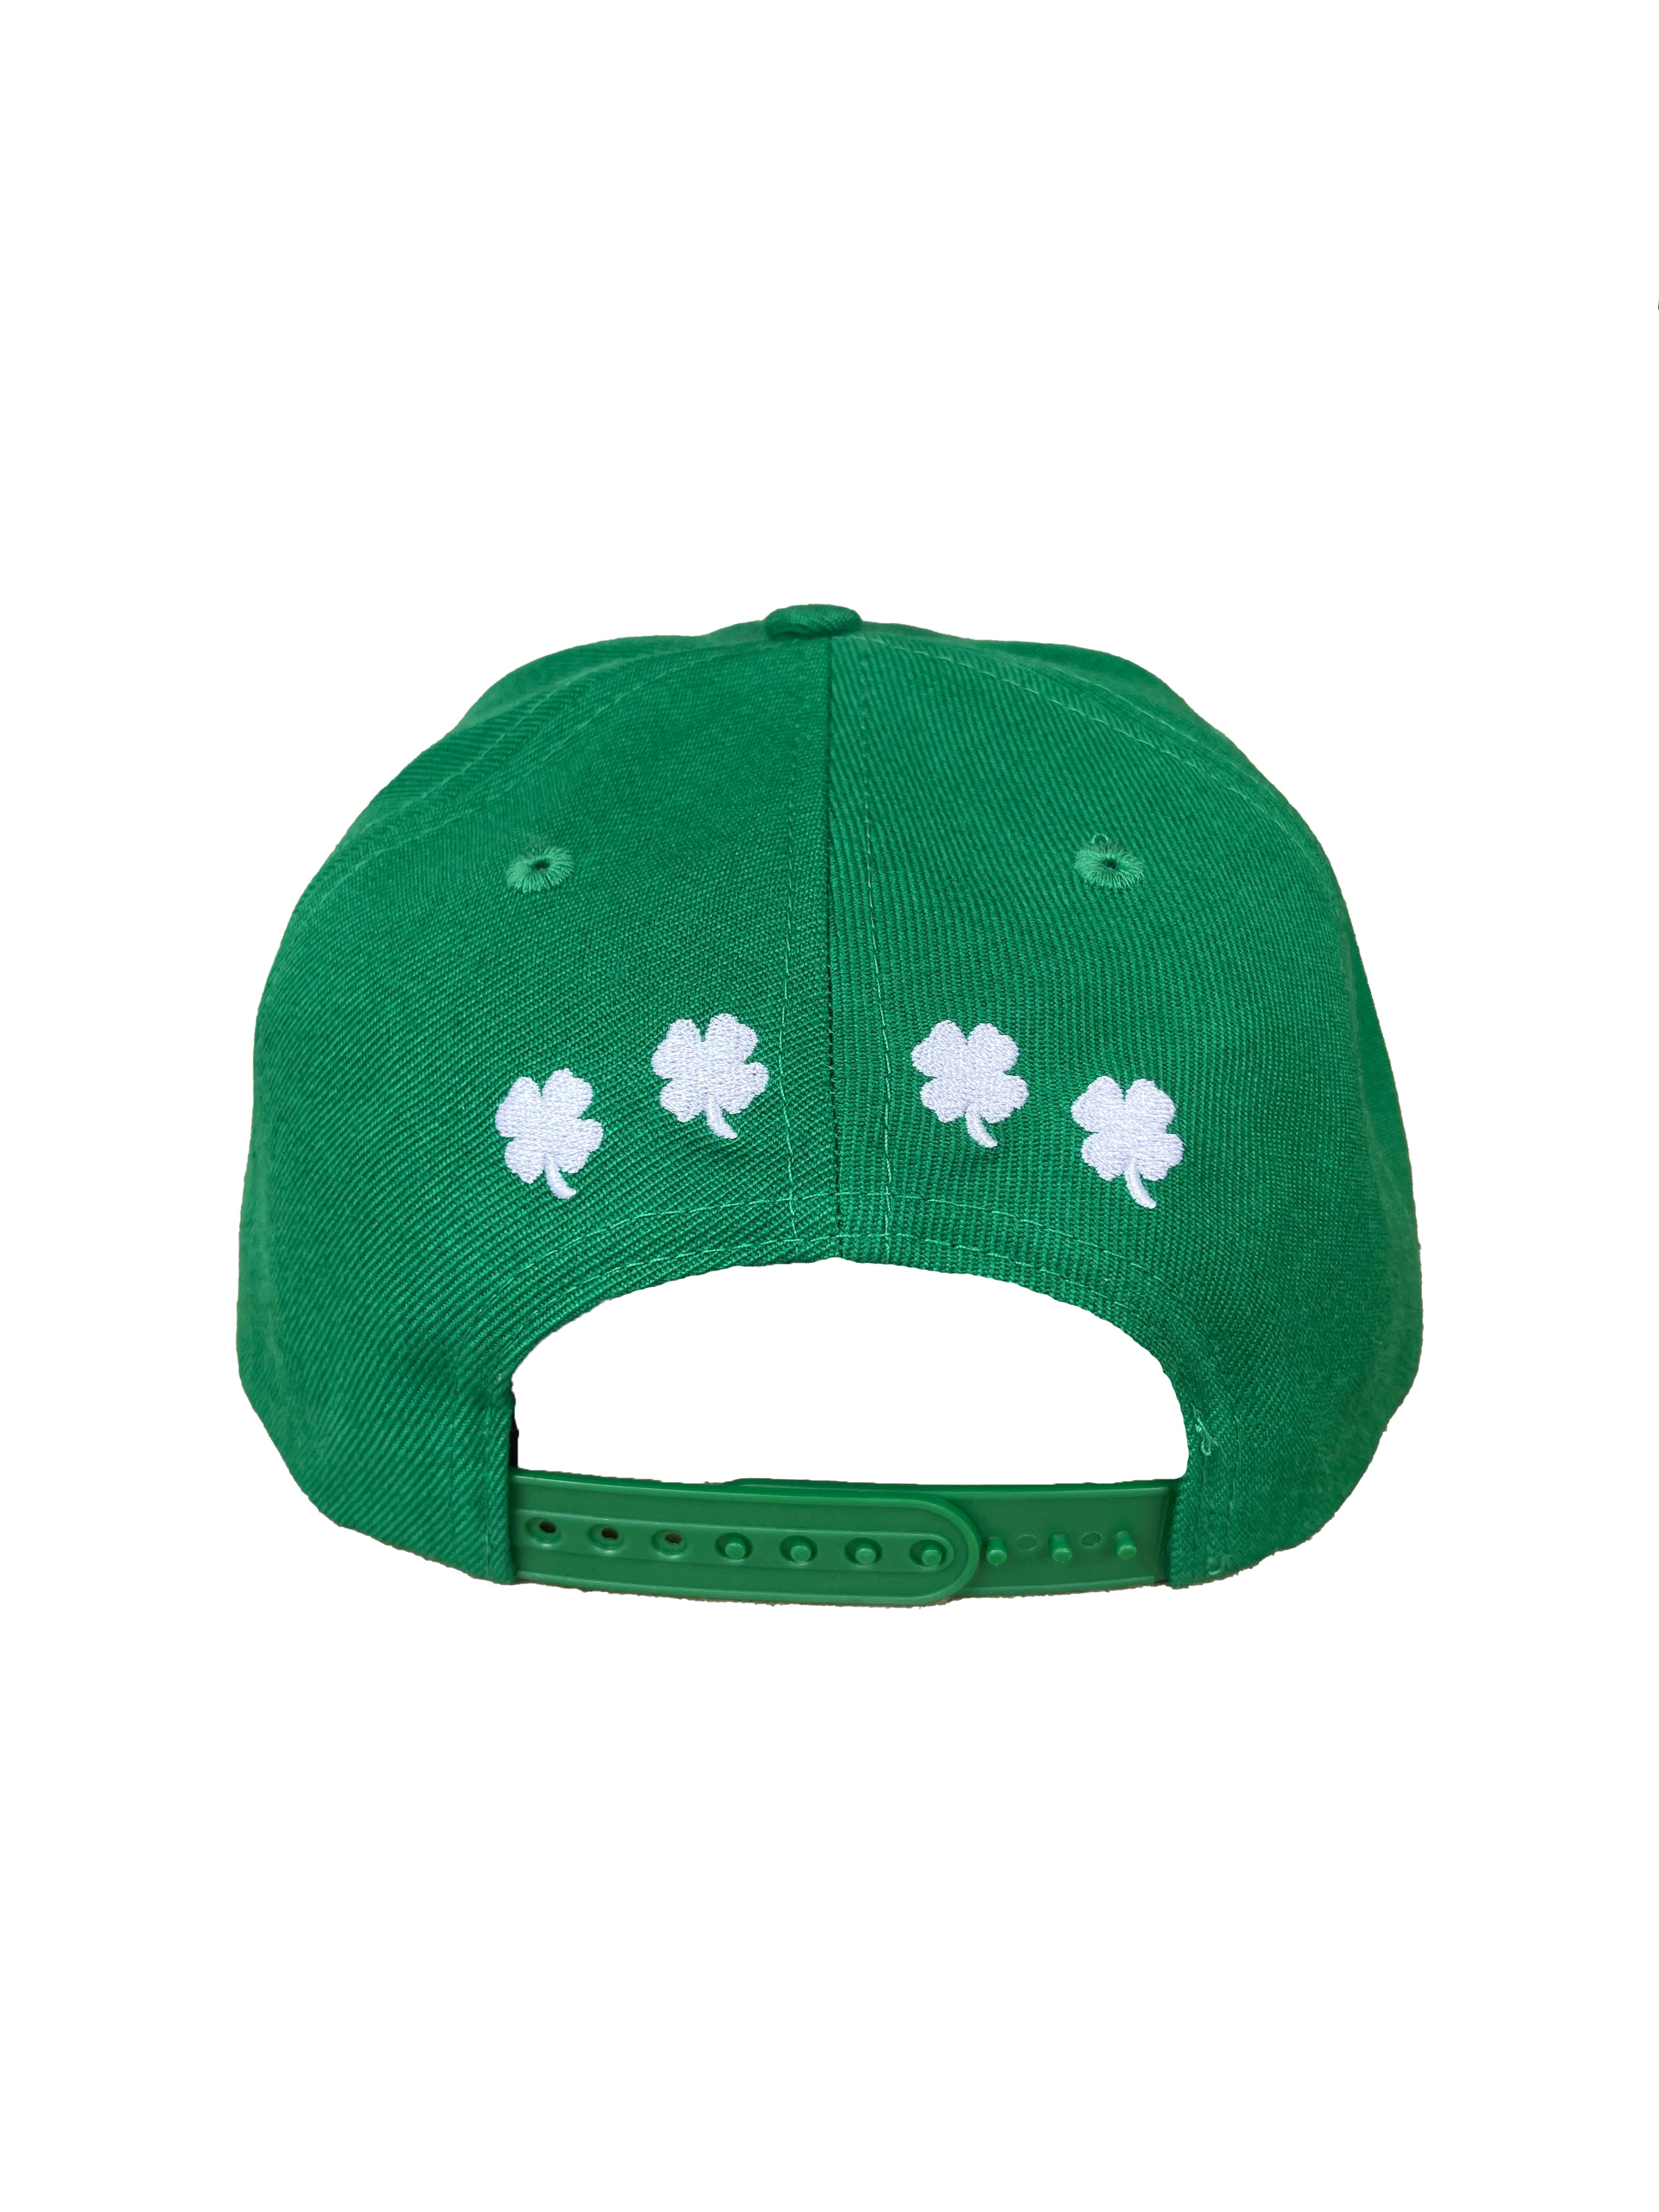 Green Snapback Hat